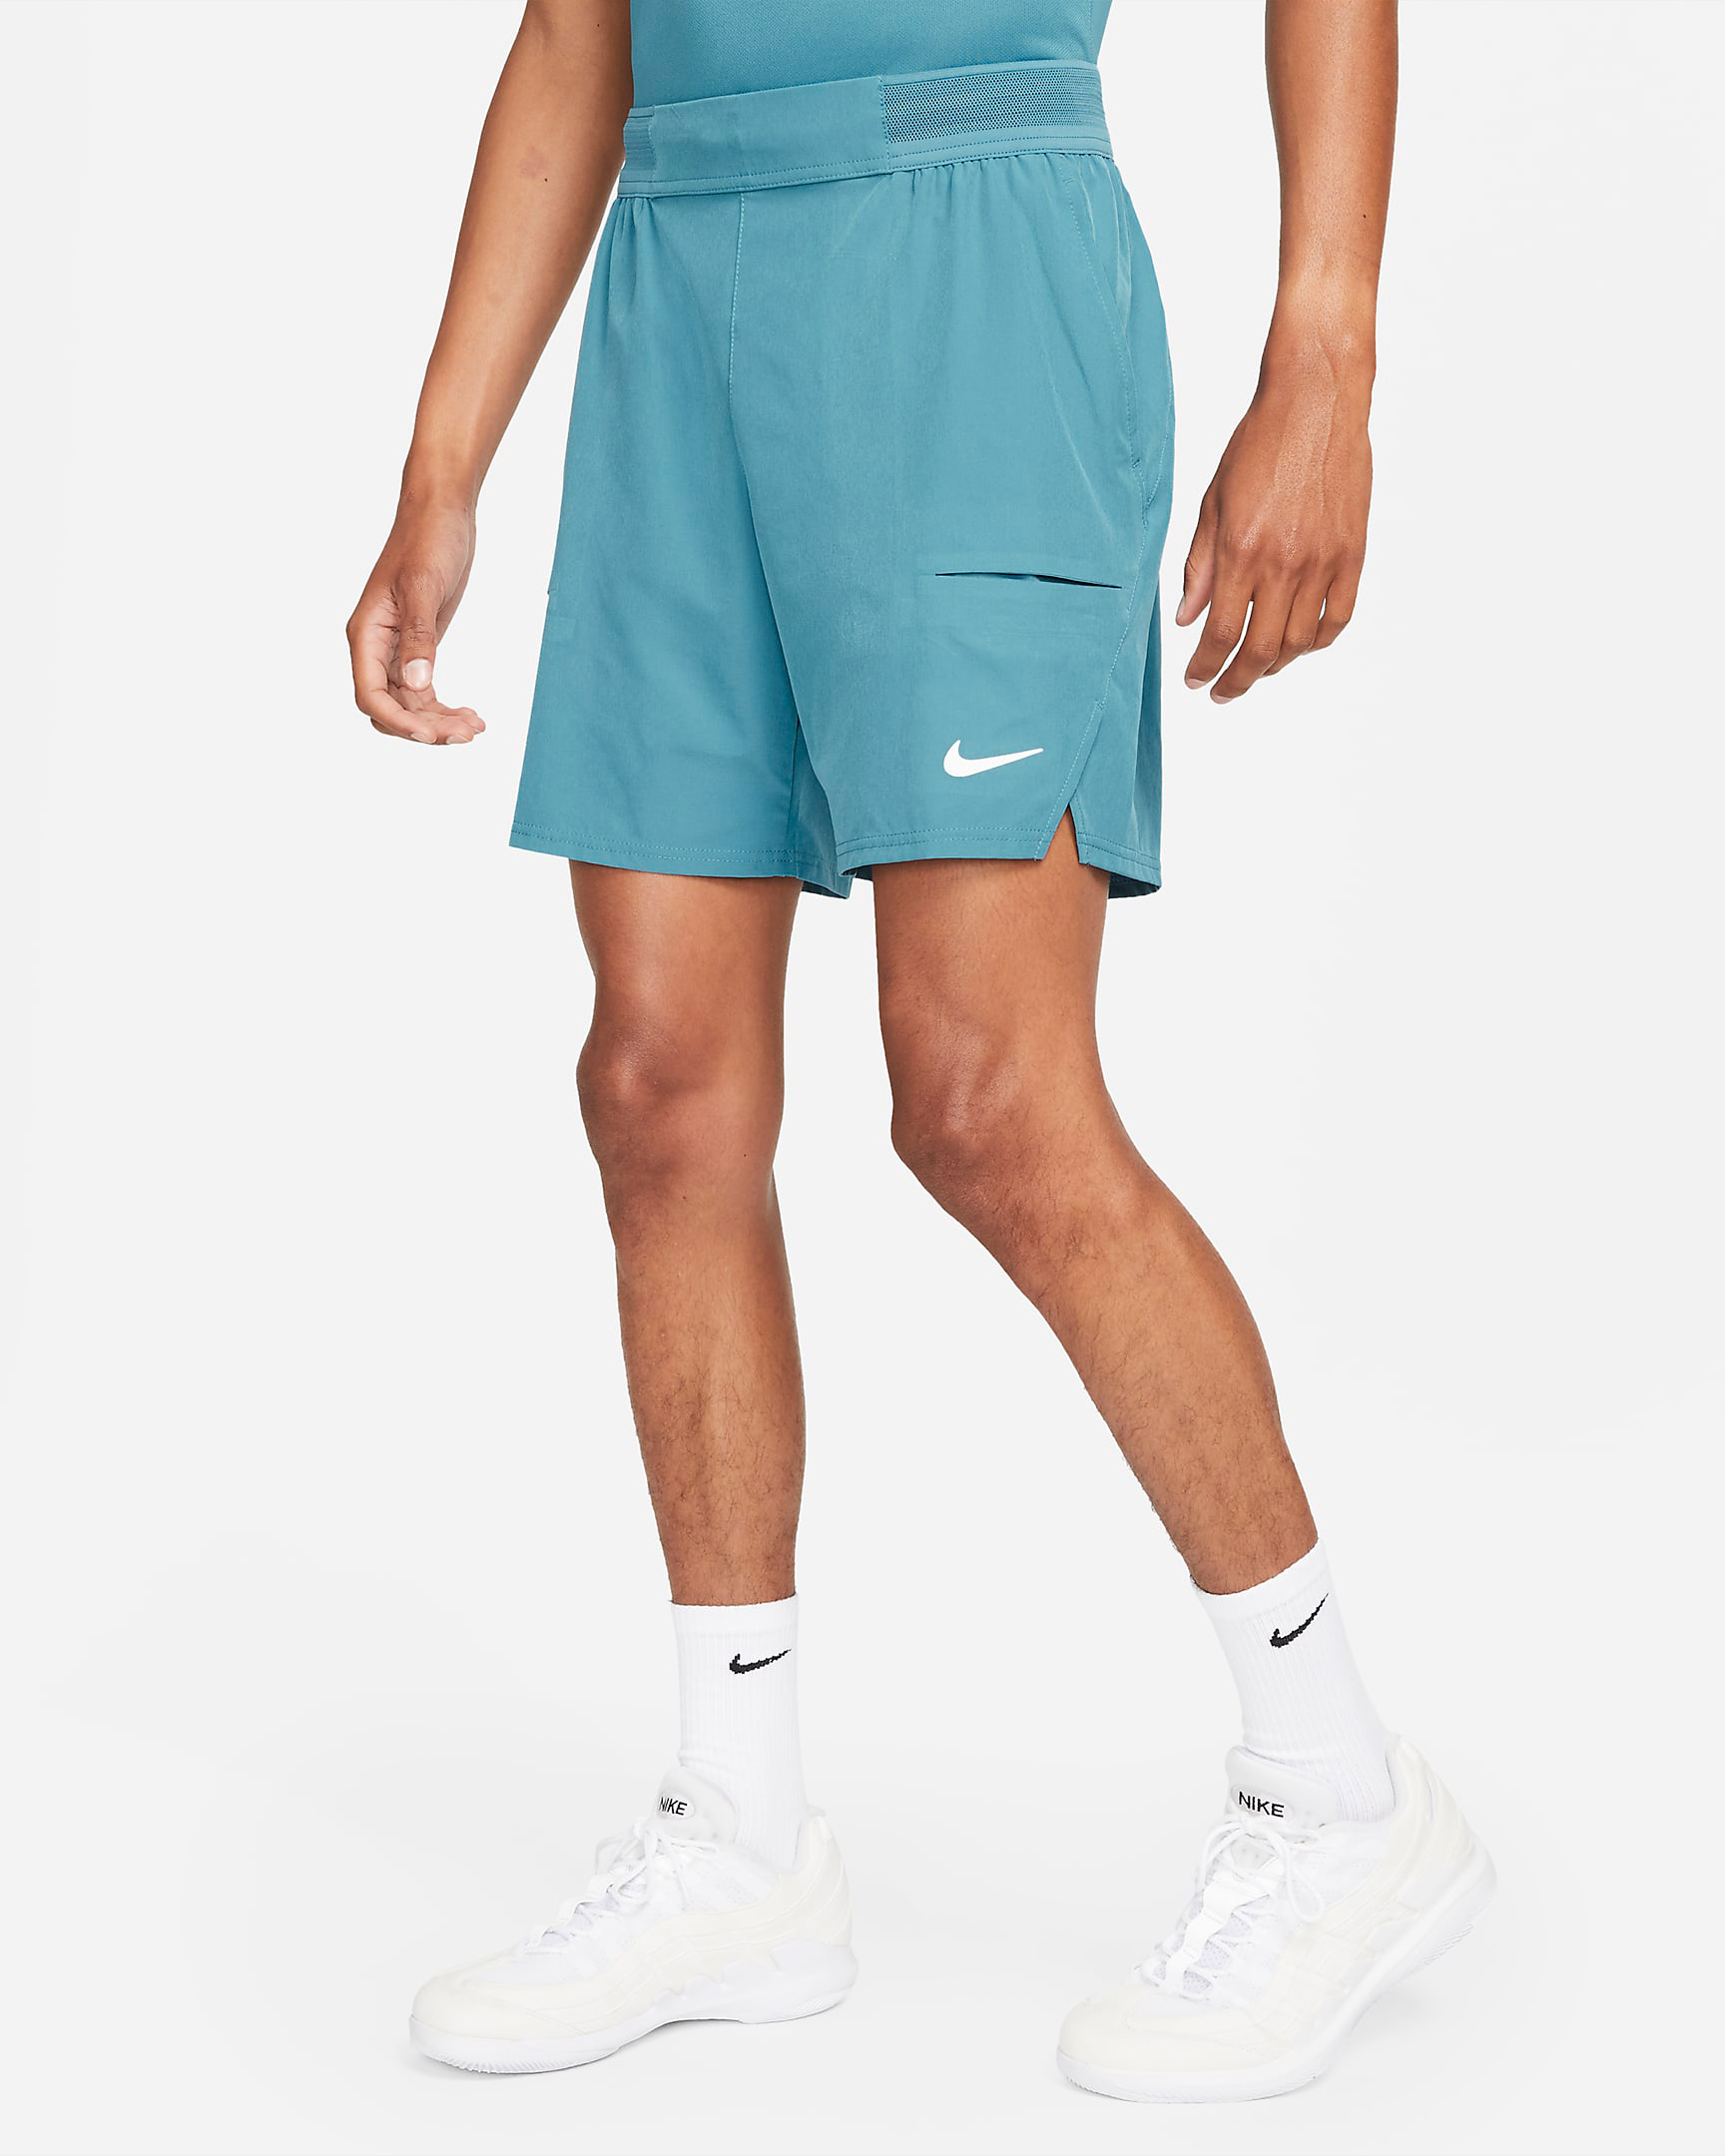 nike-rift-blue-tennis-shirt-shorts-1